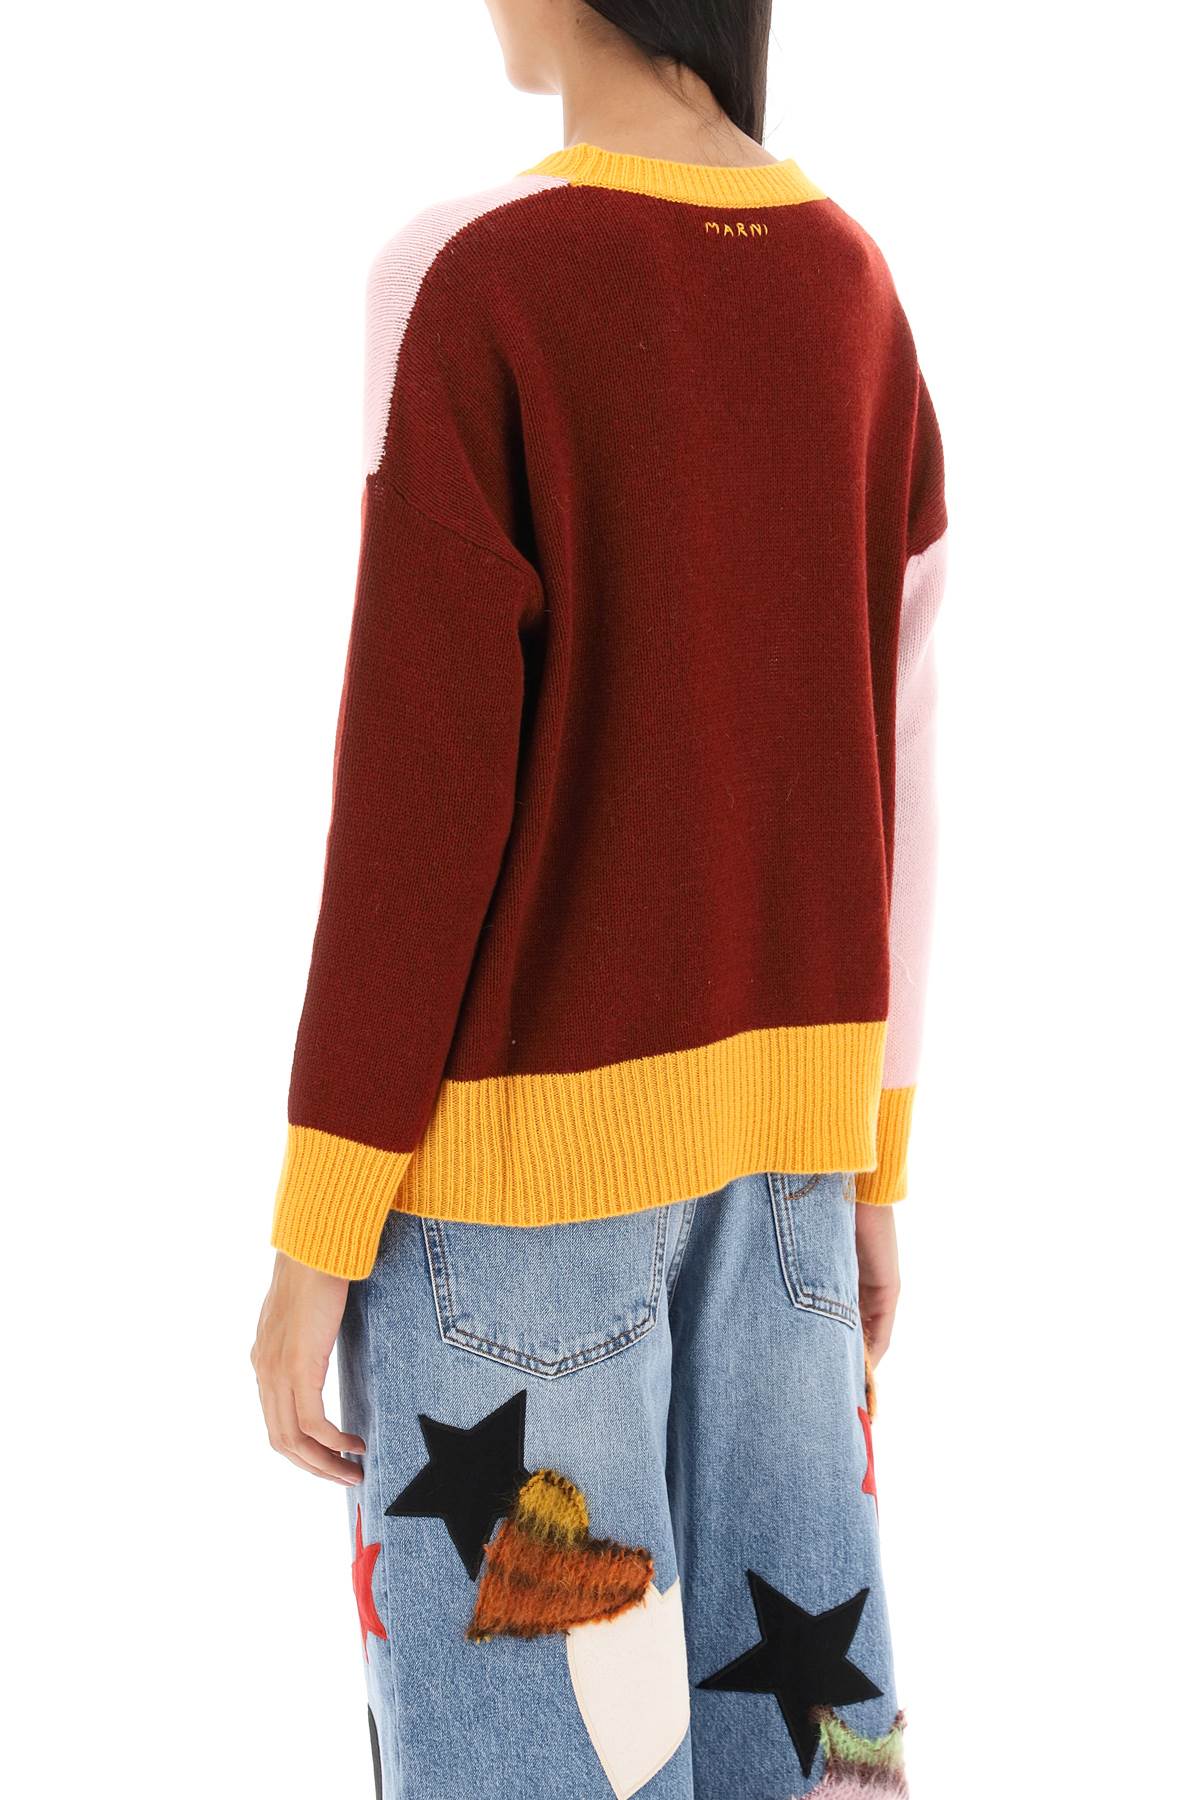 Marni colorblocked cashmere sweater-2